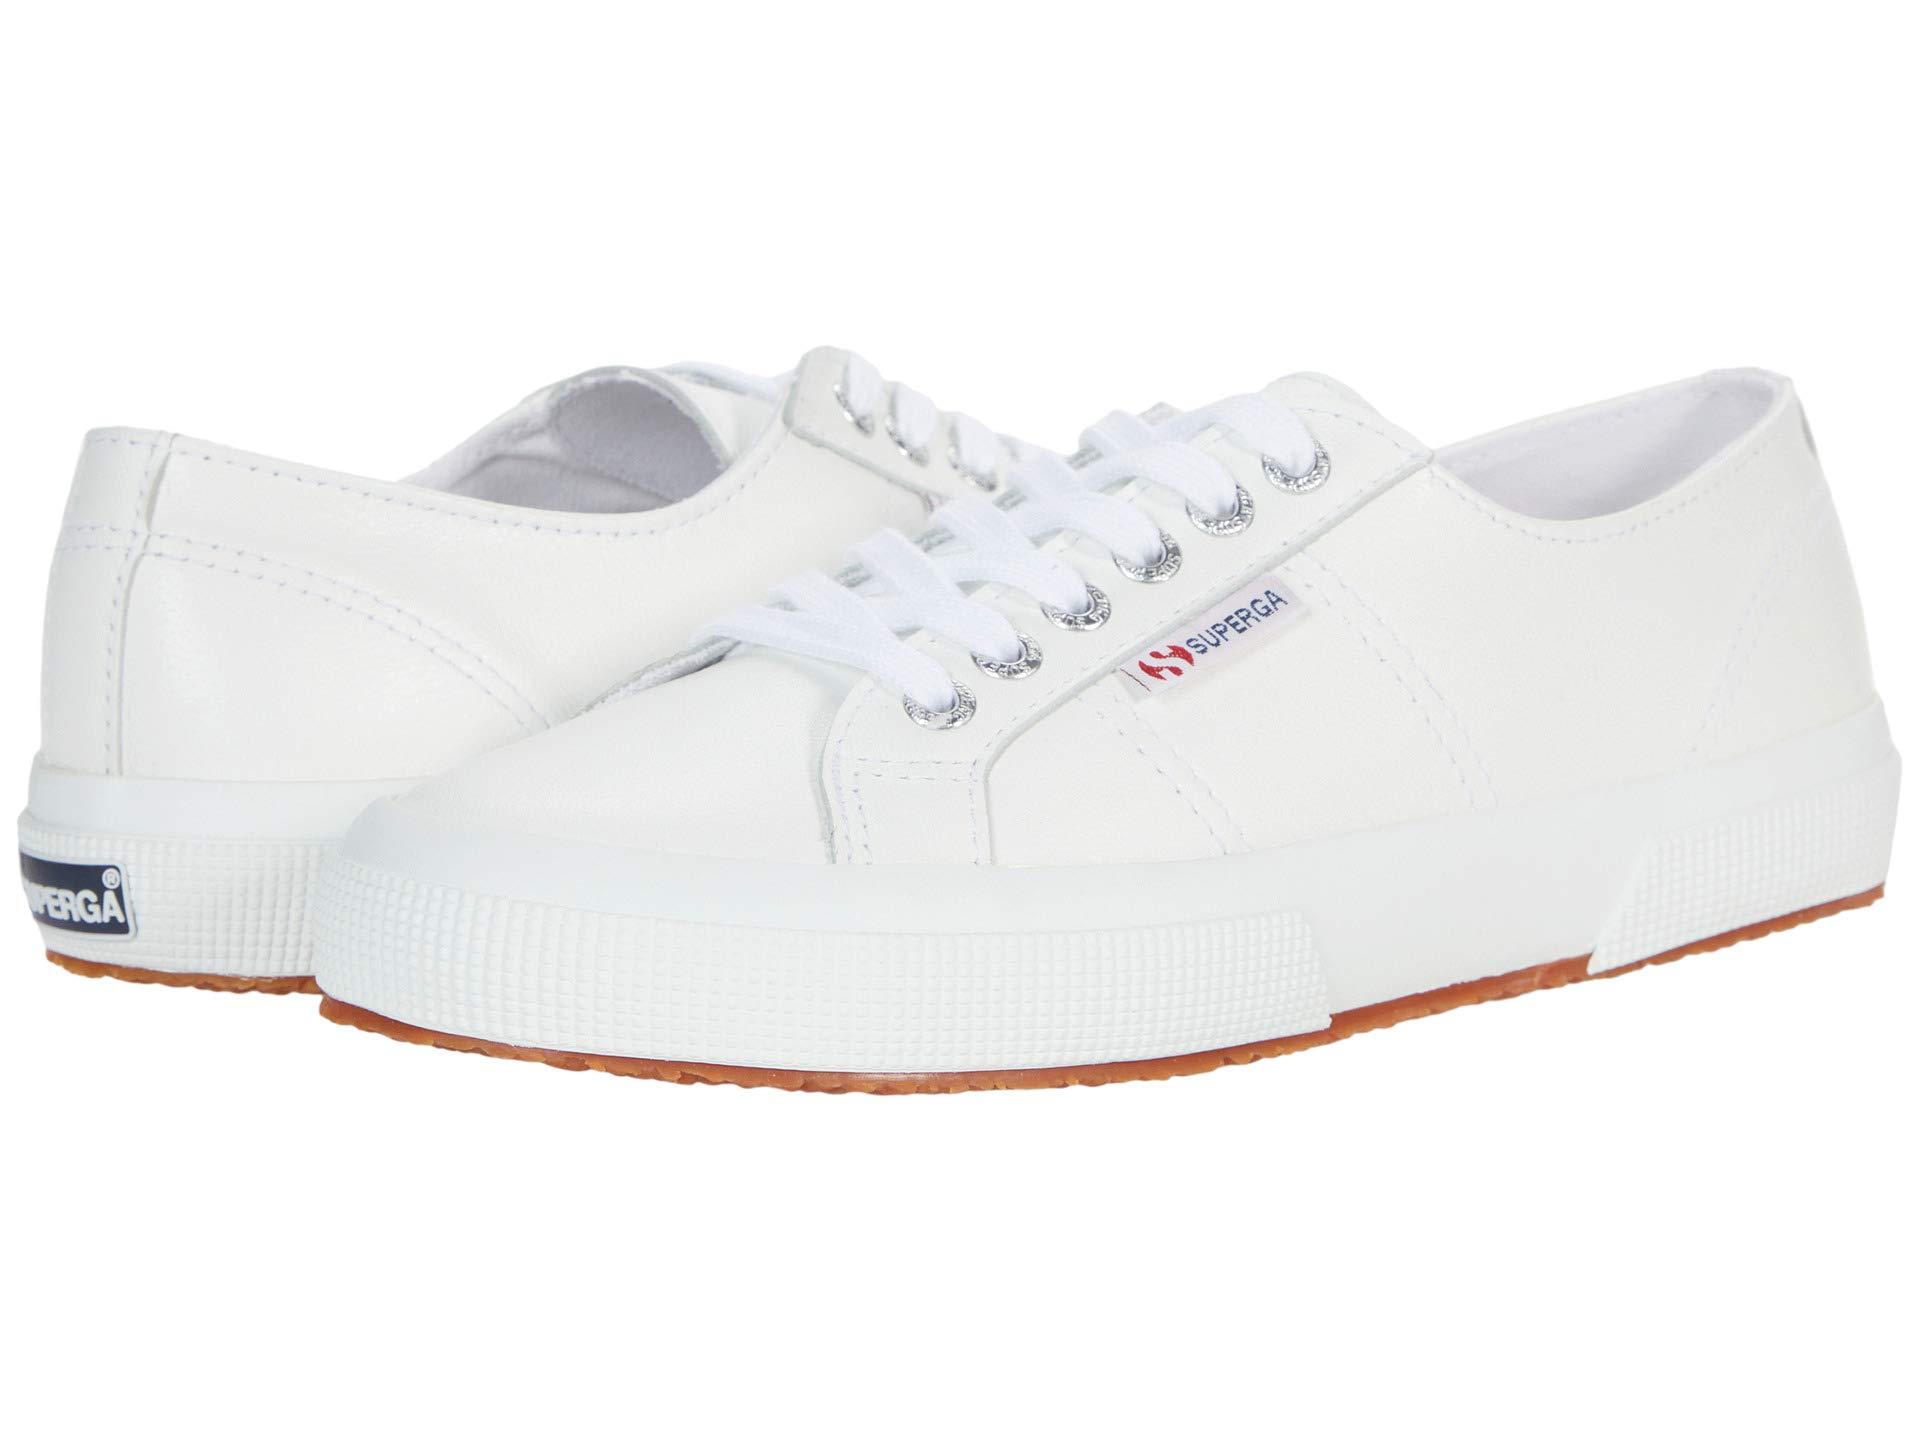 Superga Leather 2750 Nappaleau Sneaker in White - Lyst